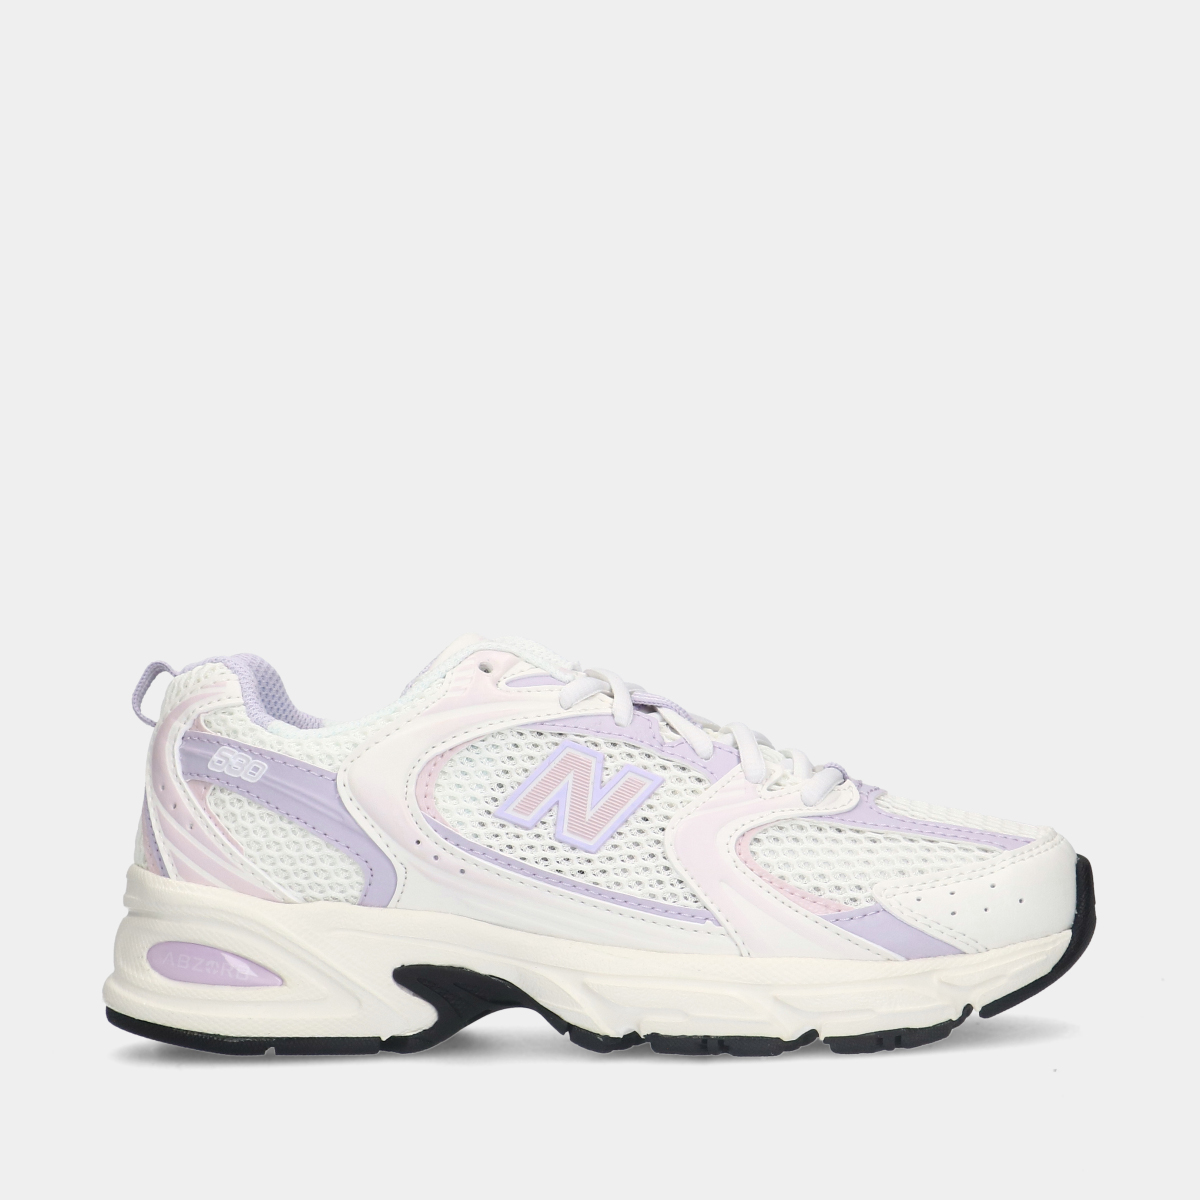 New Balance 530 Sea Salt White/Pink dames sneakers